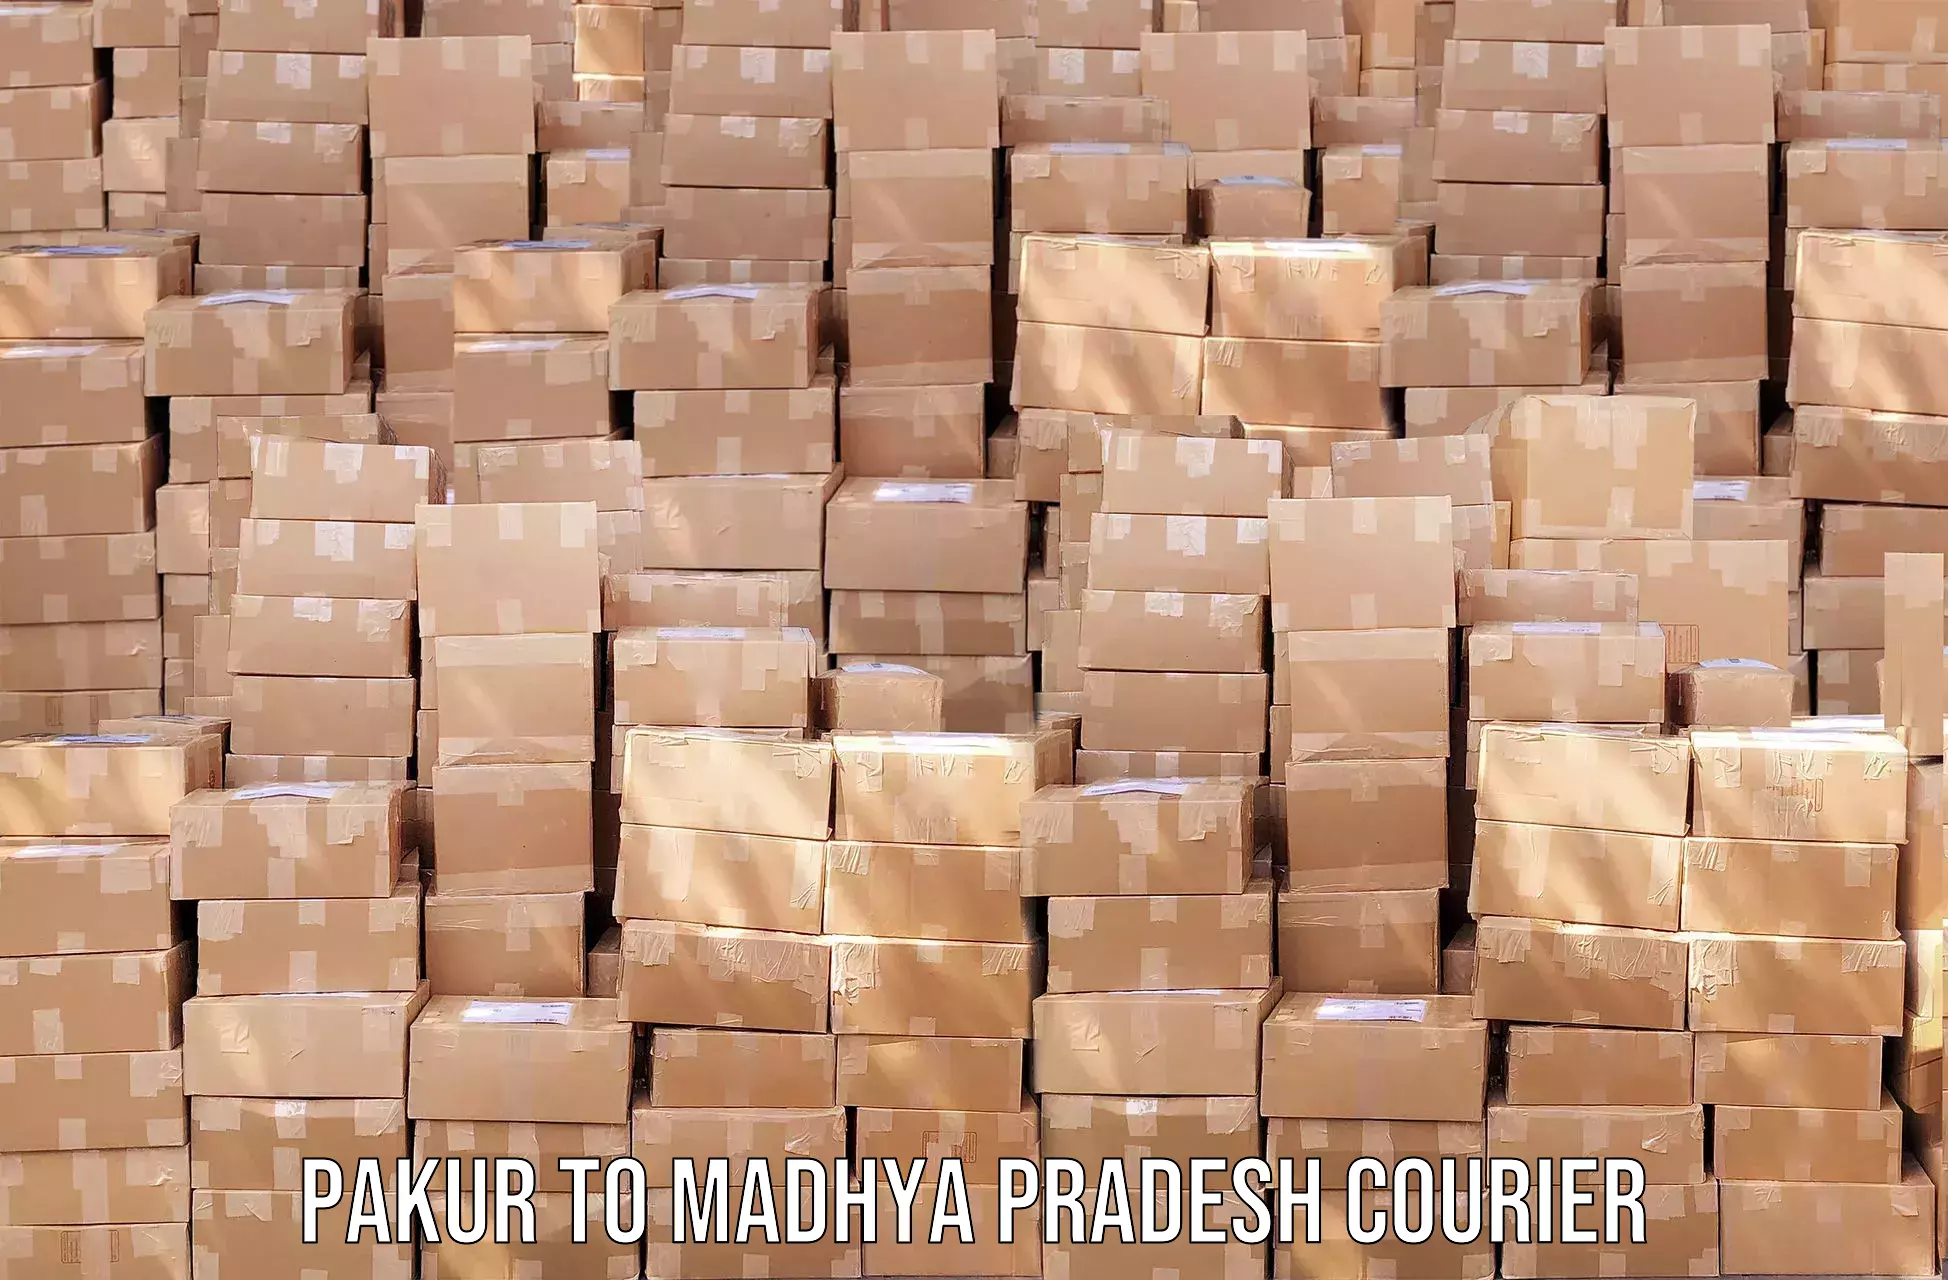 Courier service comparison Pakur to Shivpuri